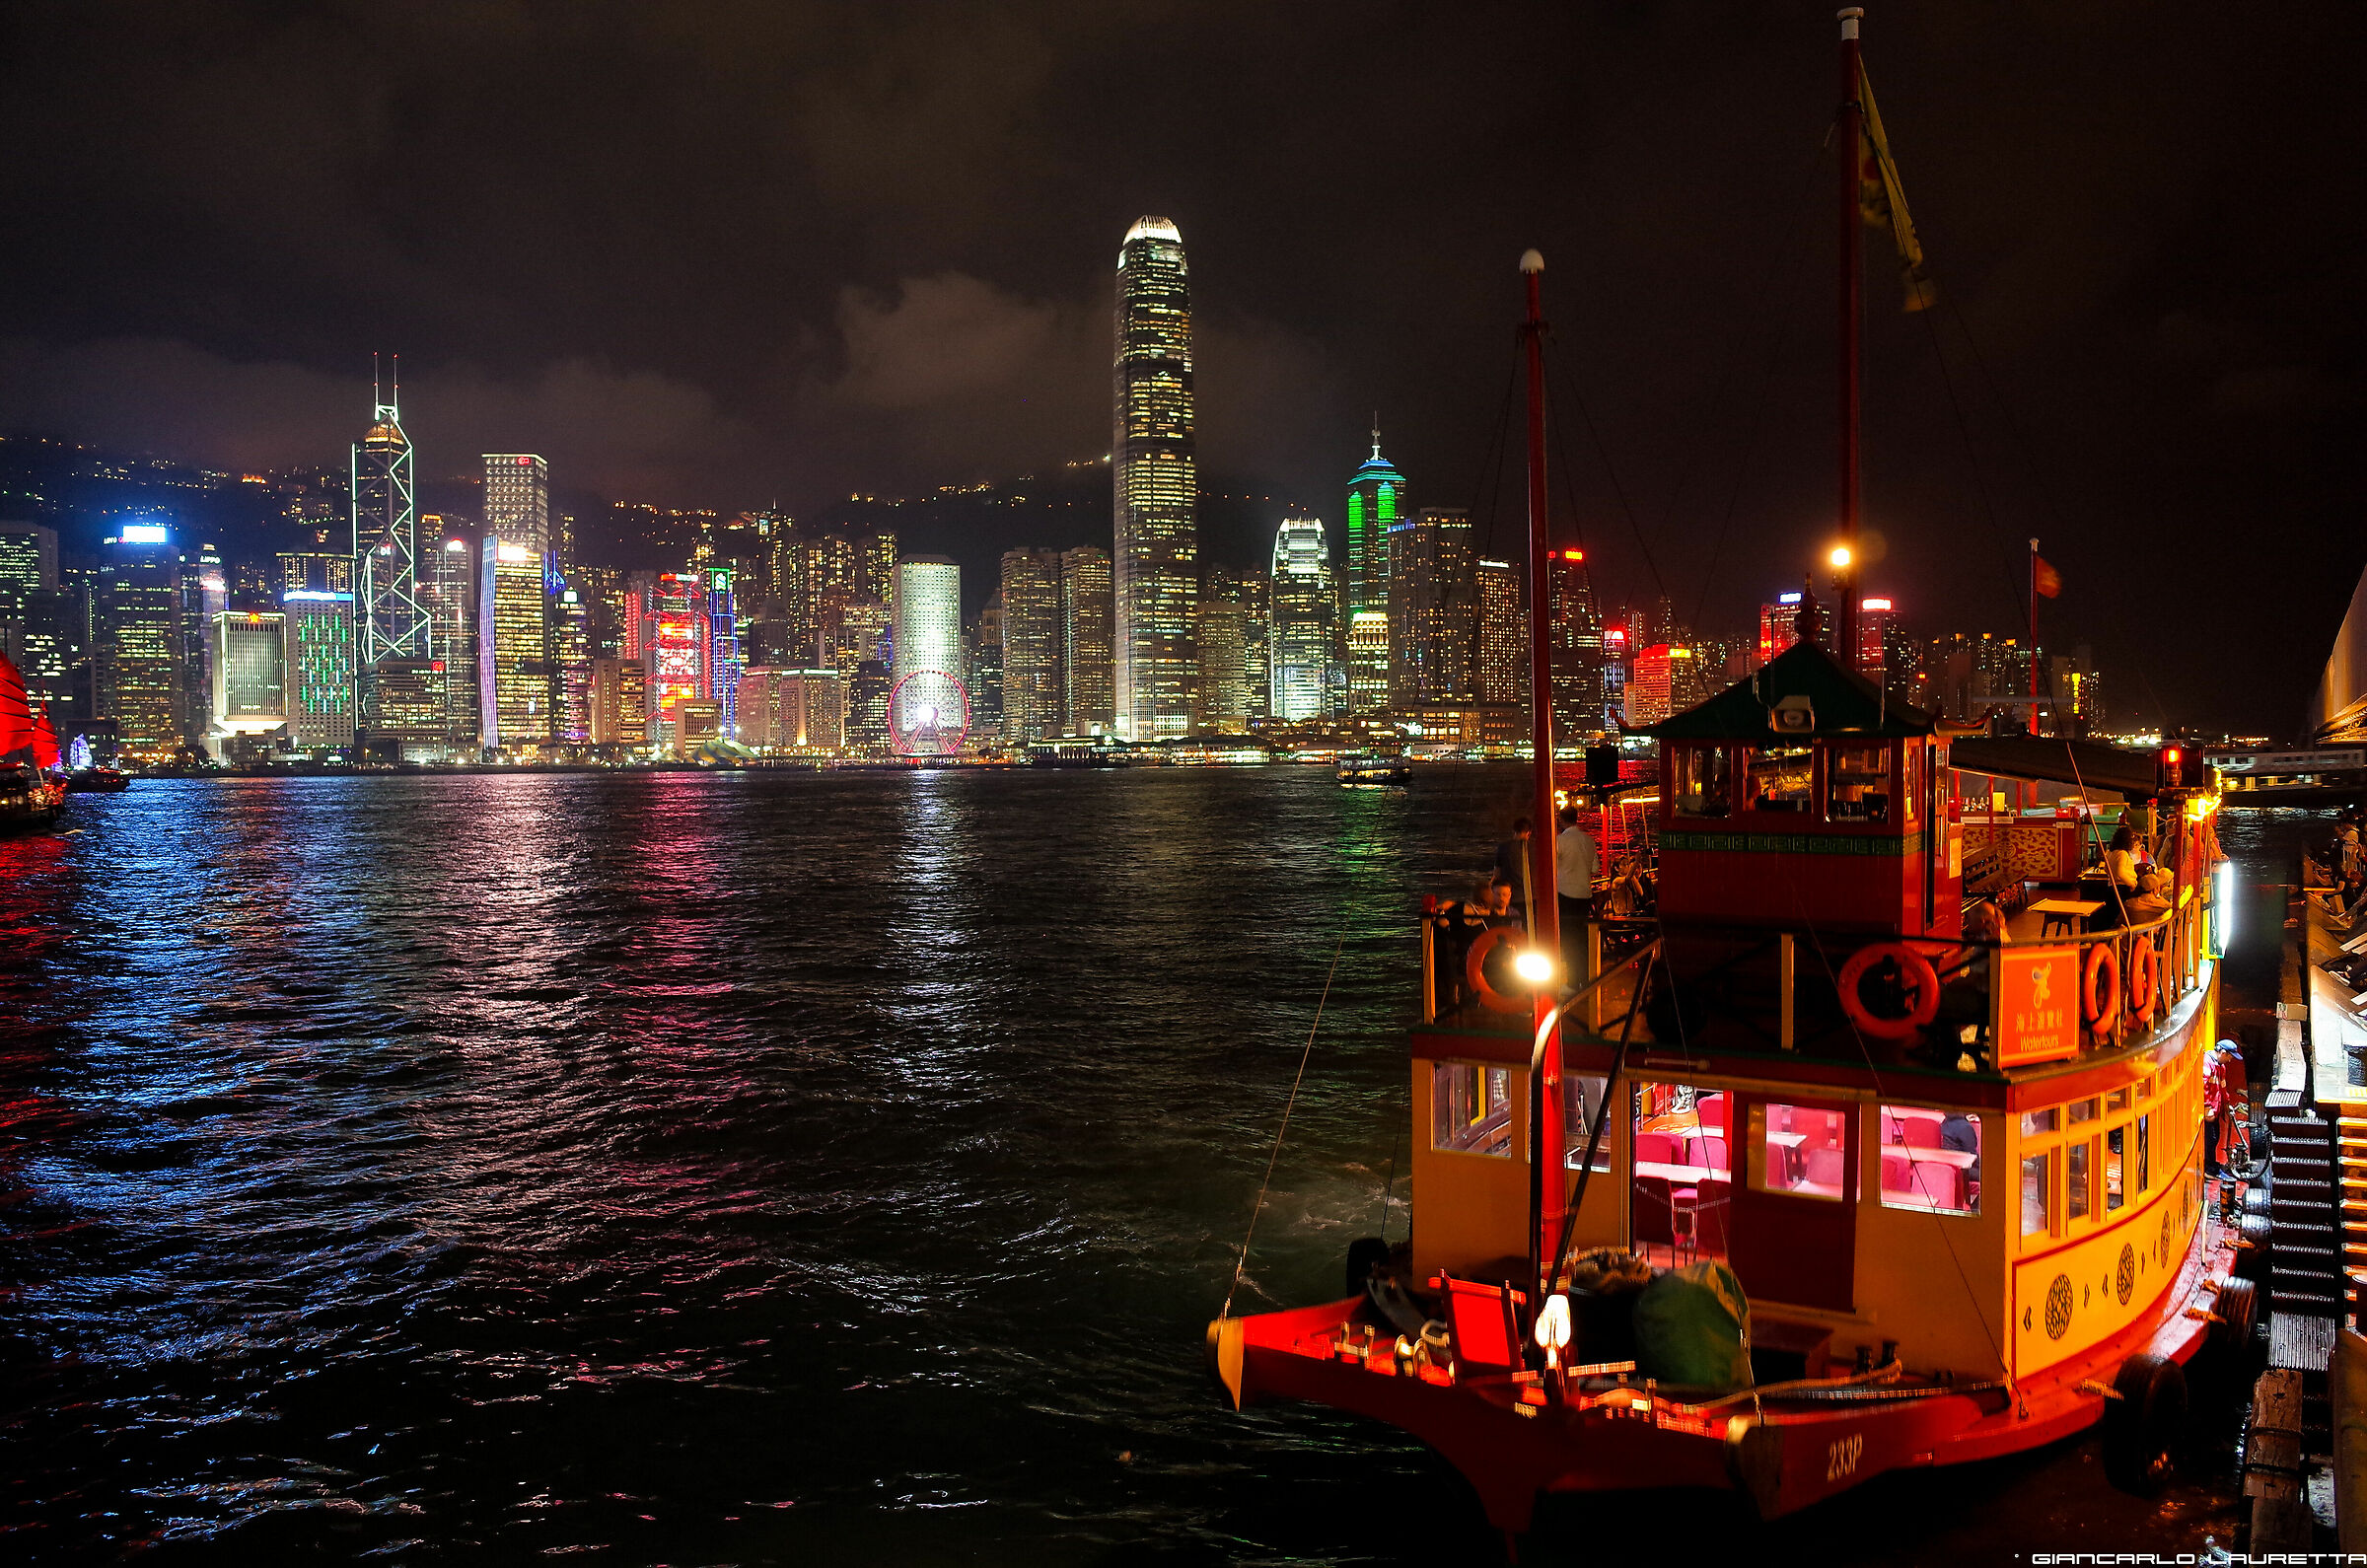 HK by night...